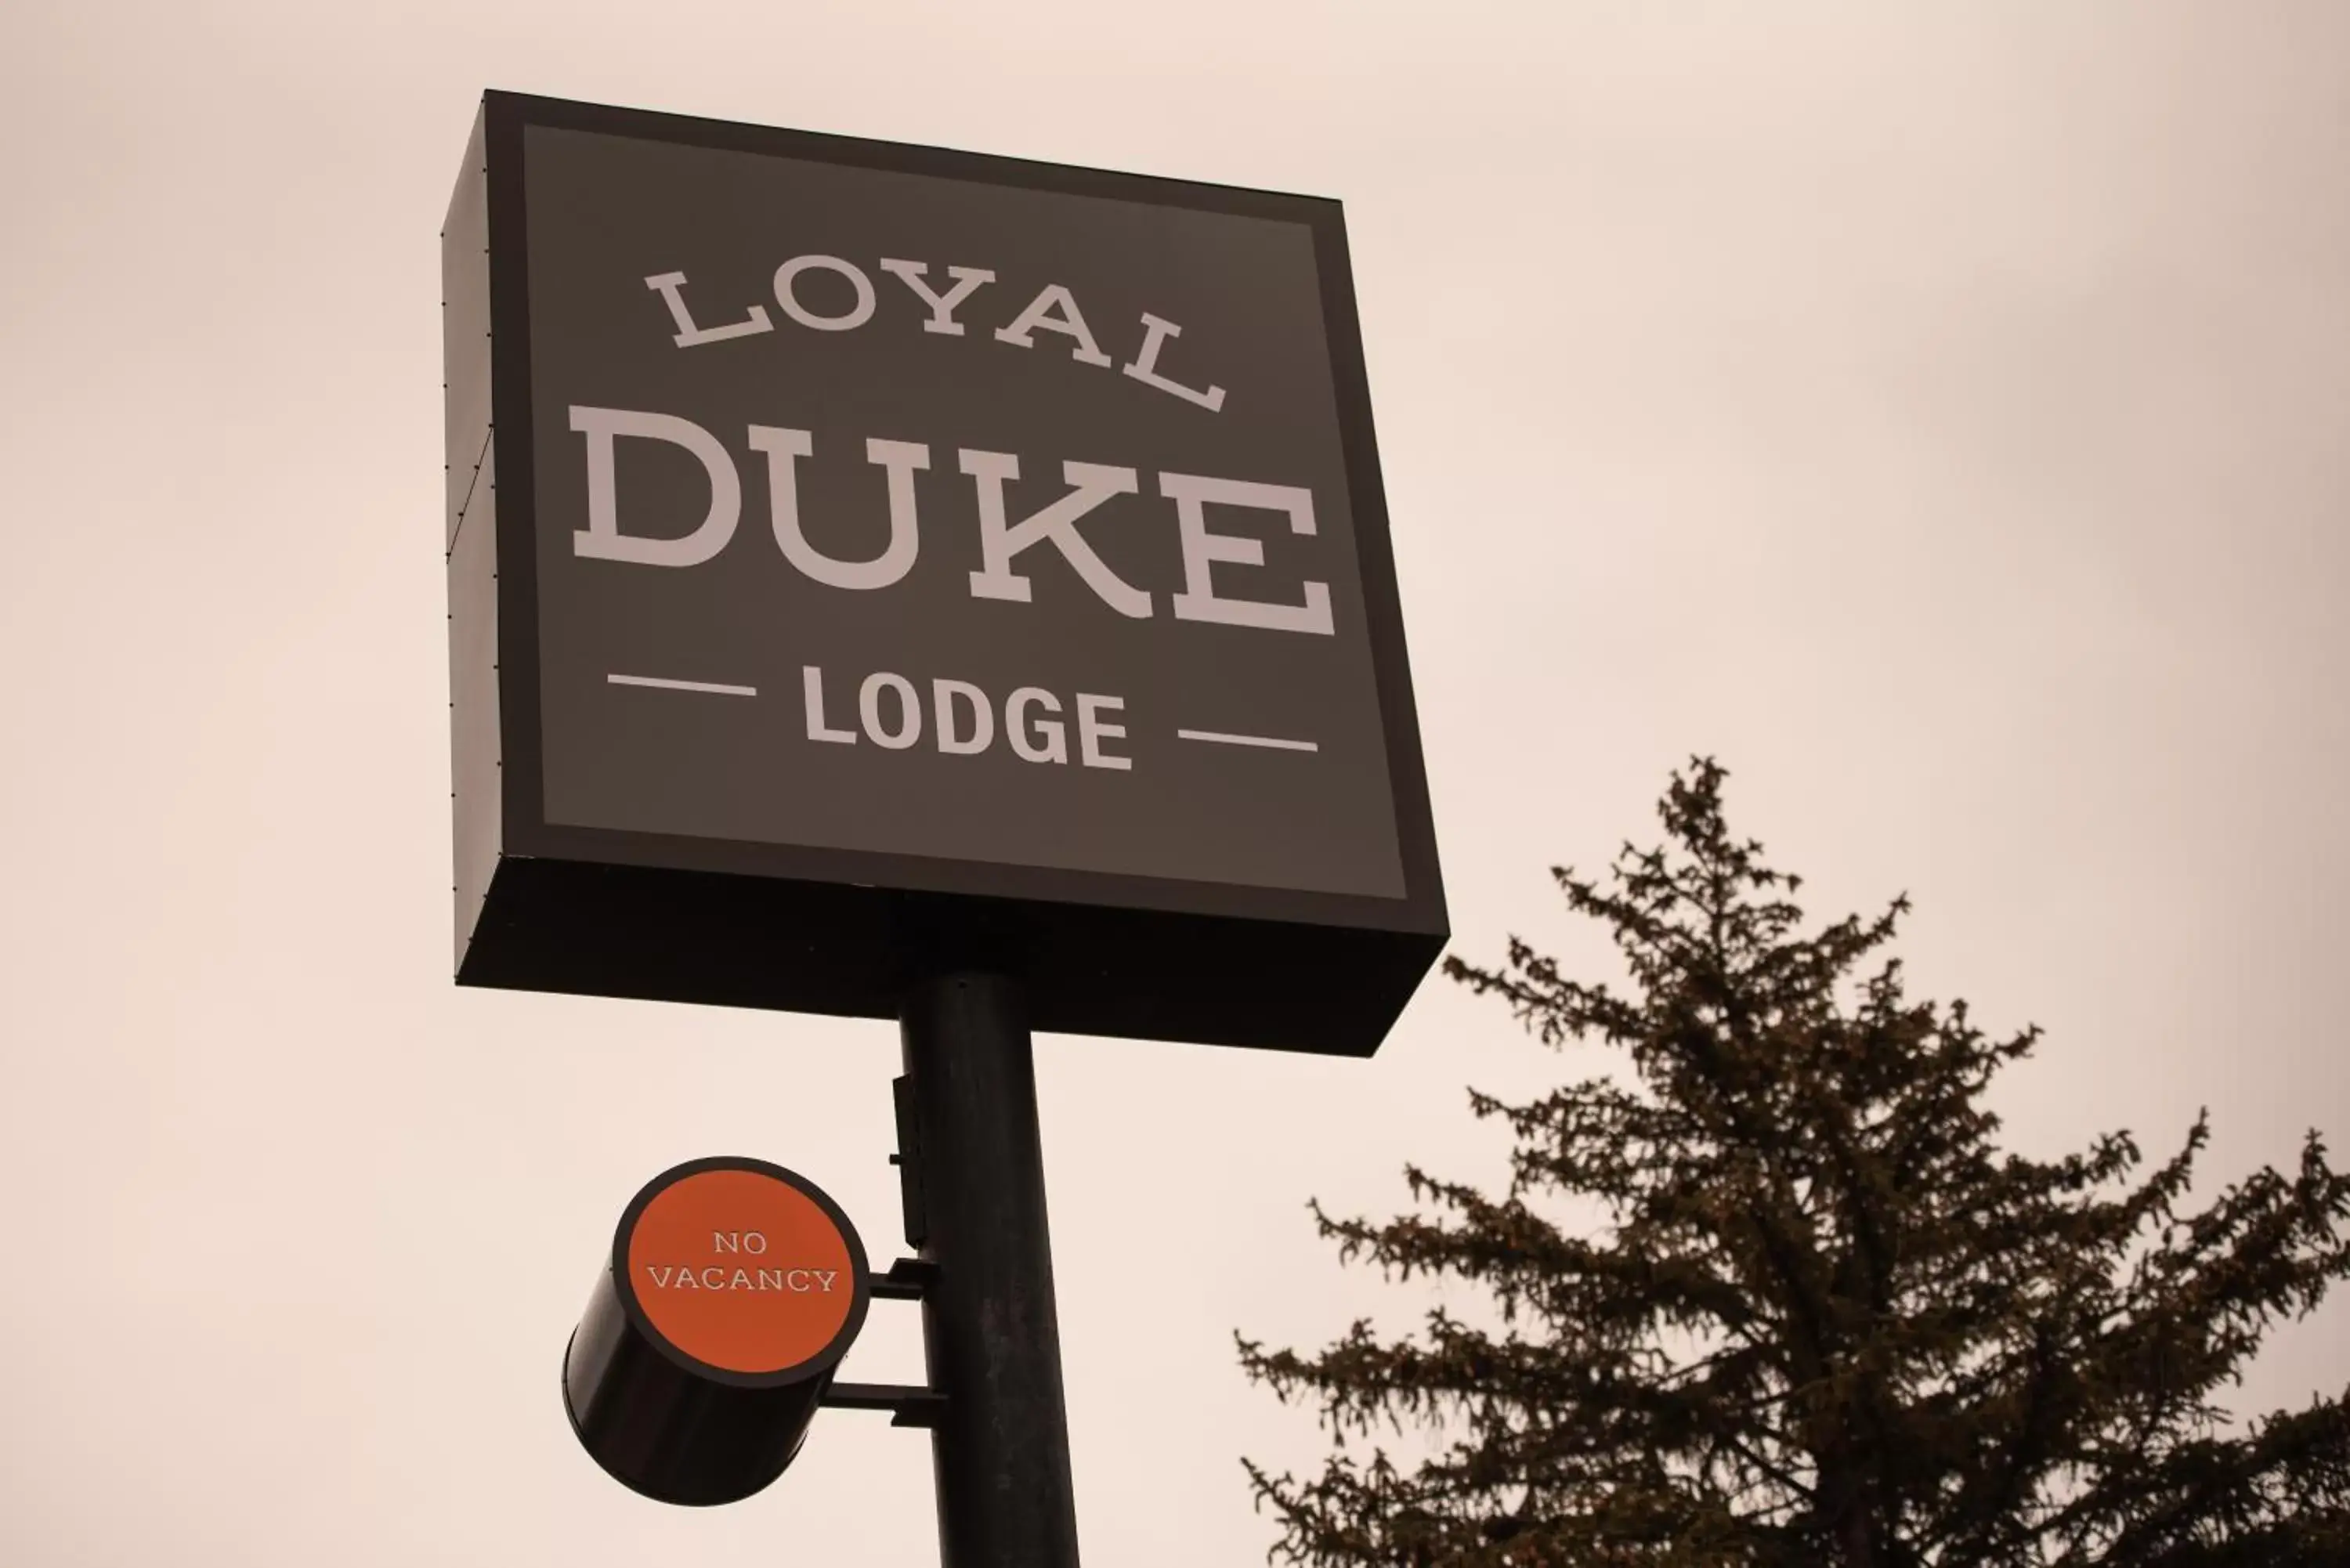 Property logo or sign in Loyal Duke Lodge